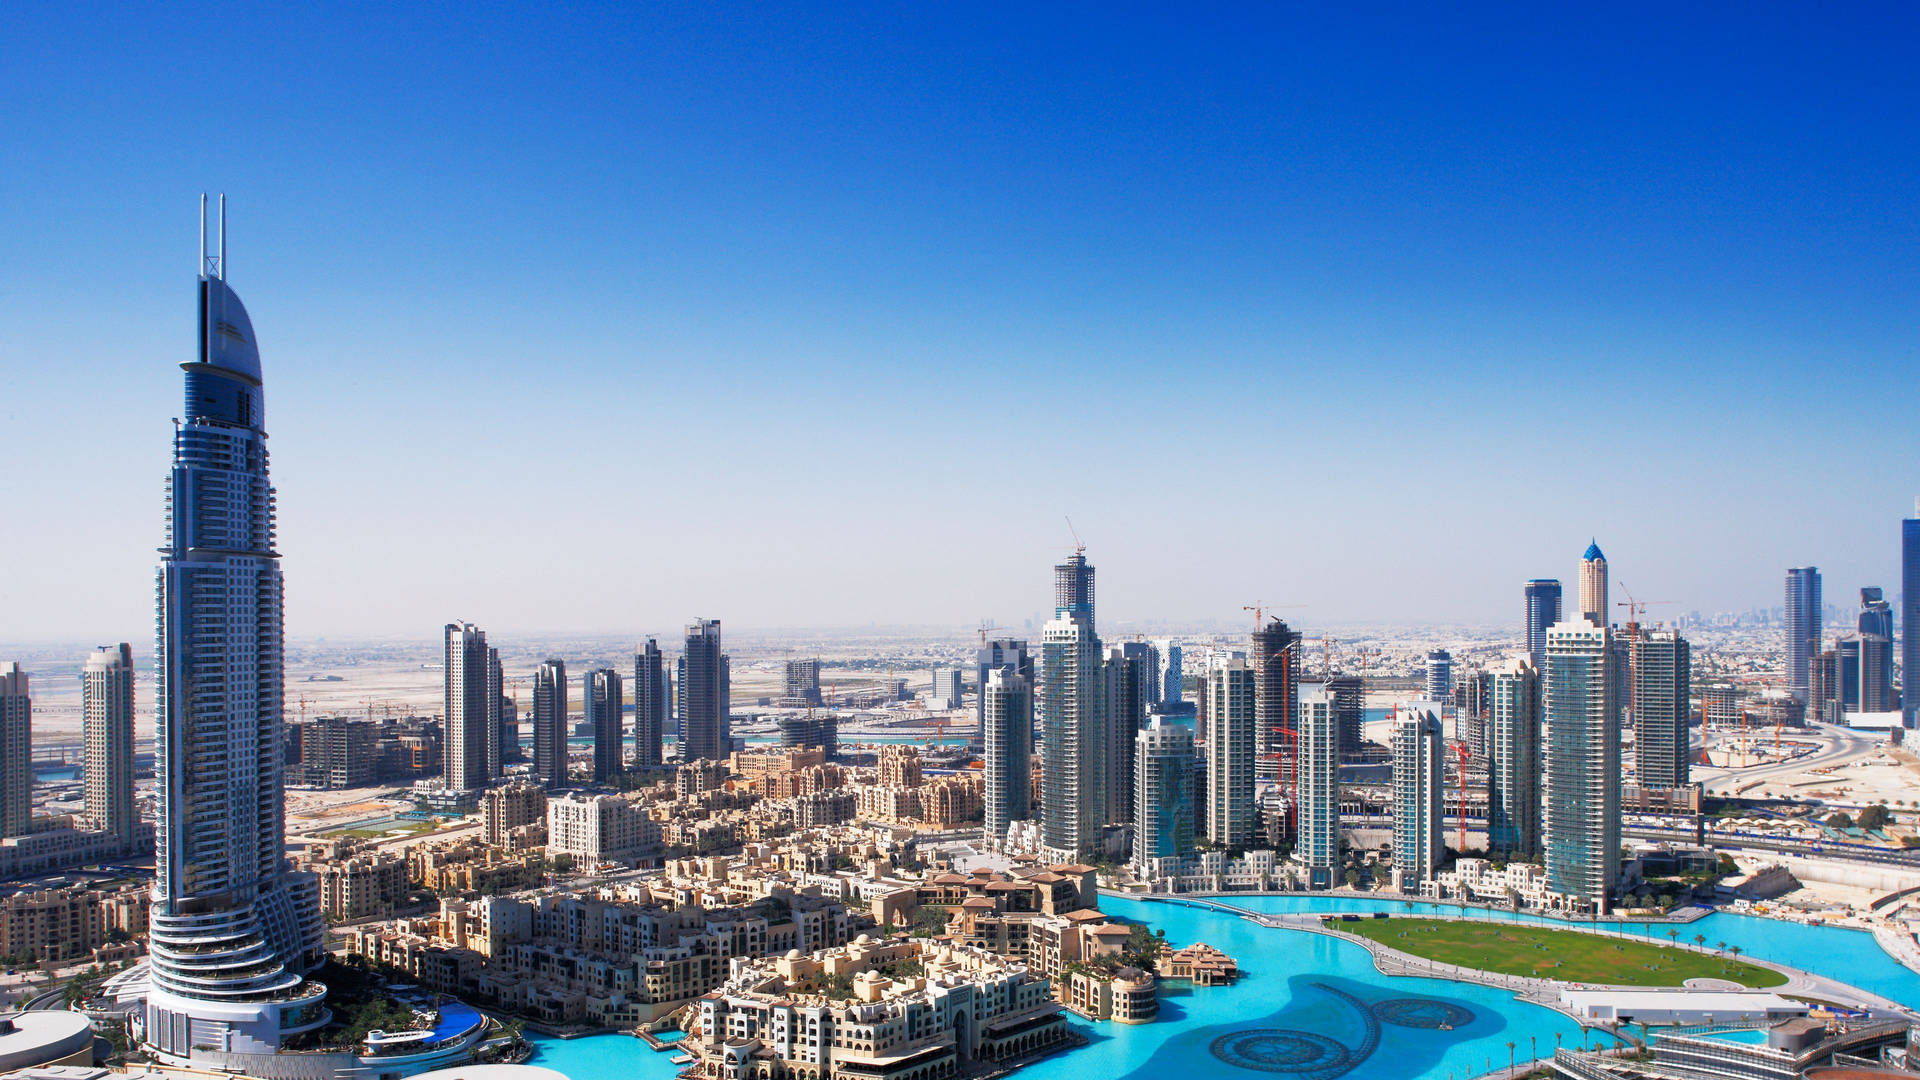 Urbanscape Under Blue Sky, Dubai 4k Wallpaper